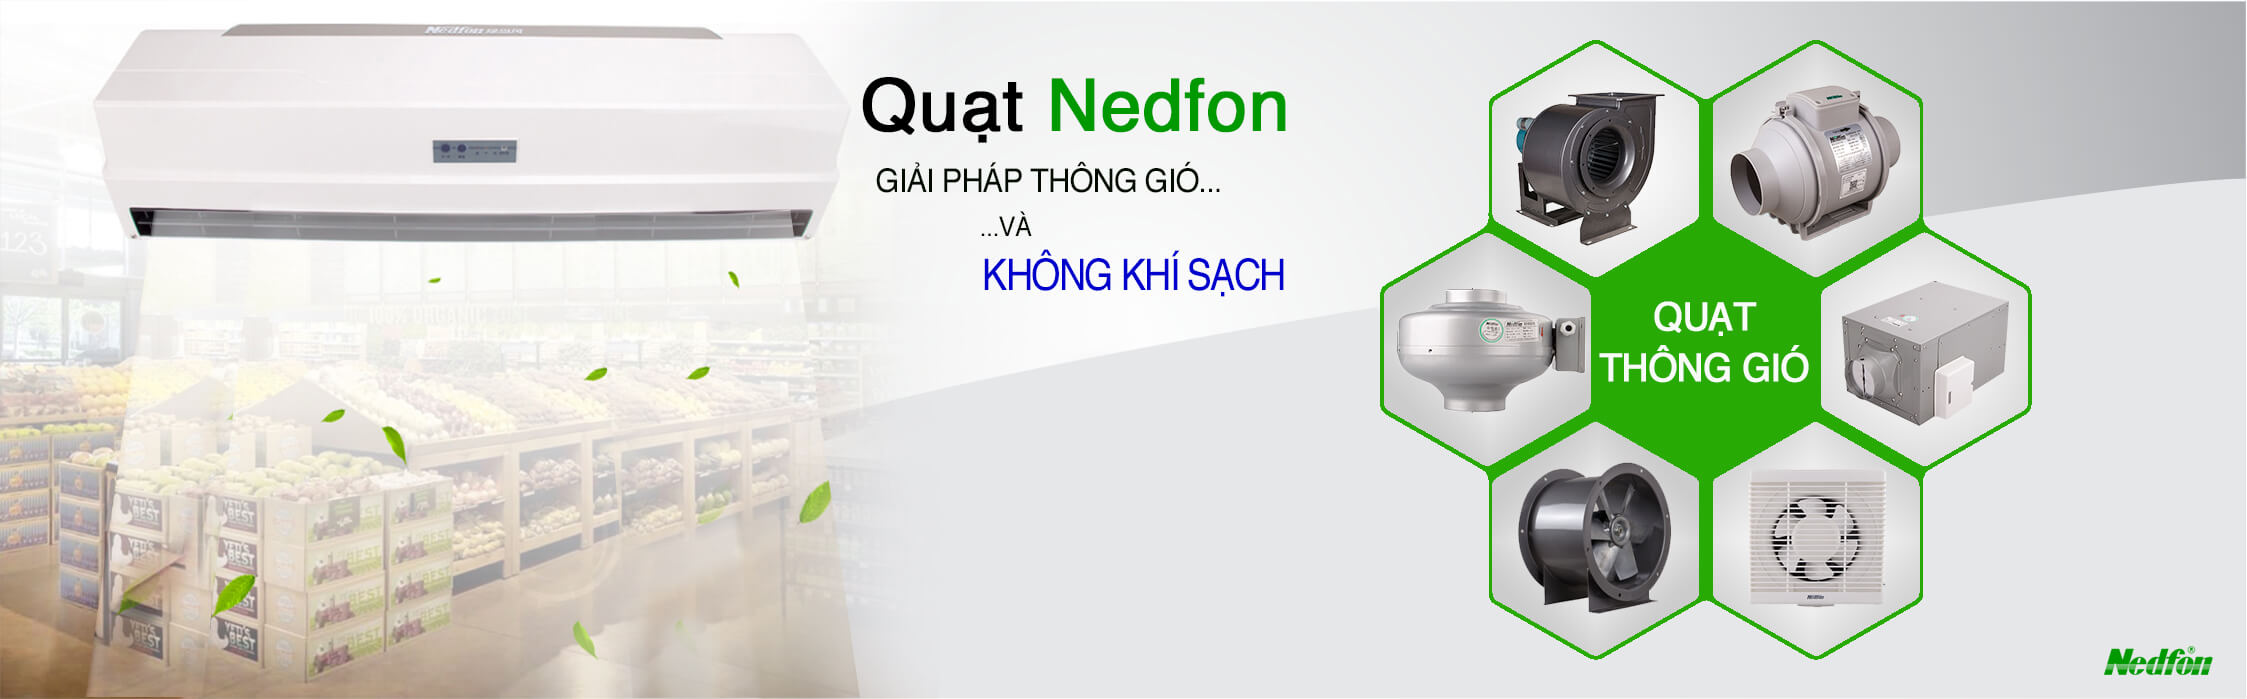 quat-thong-gio-nedfon-banner3